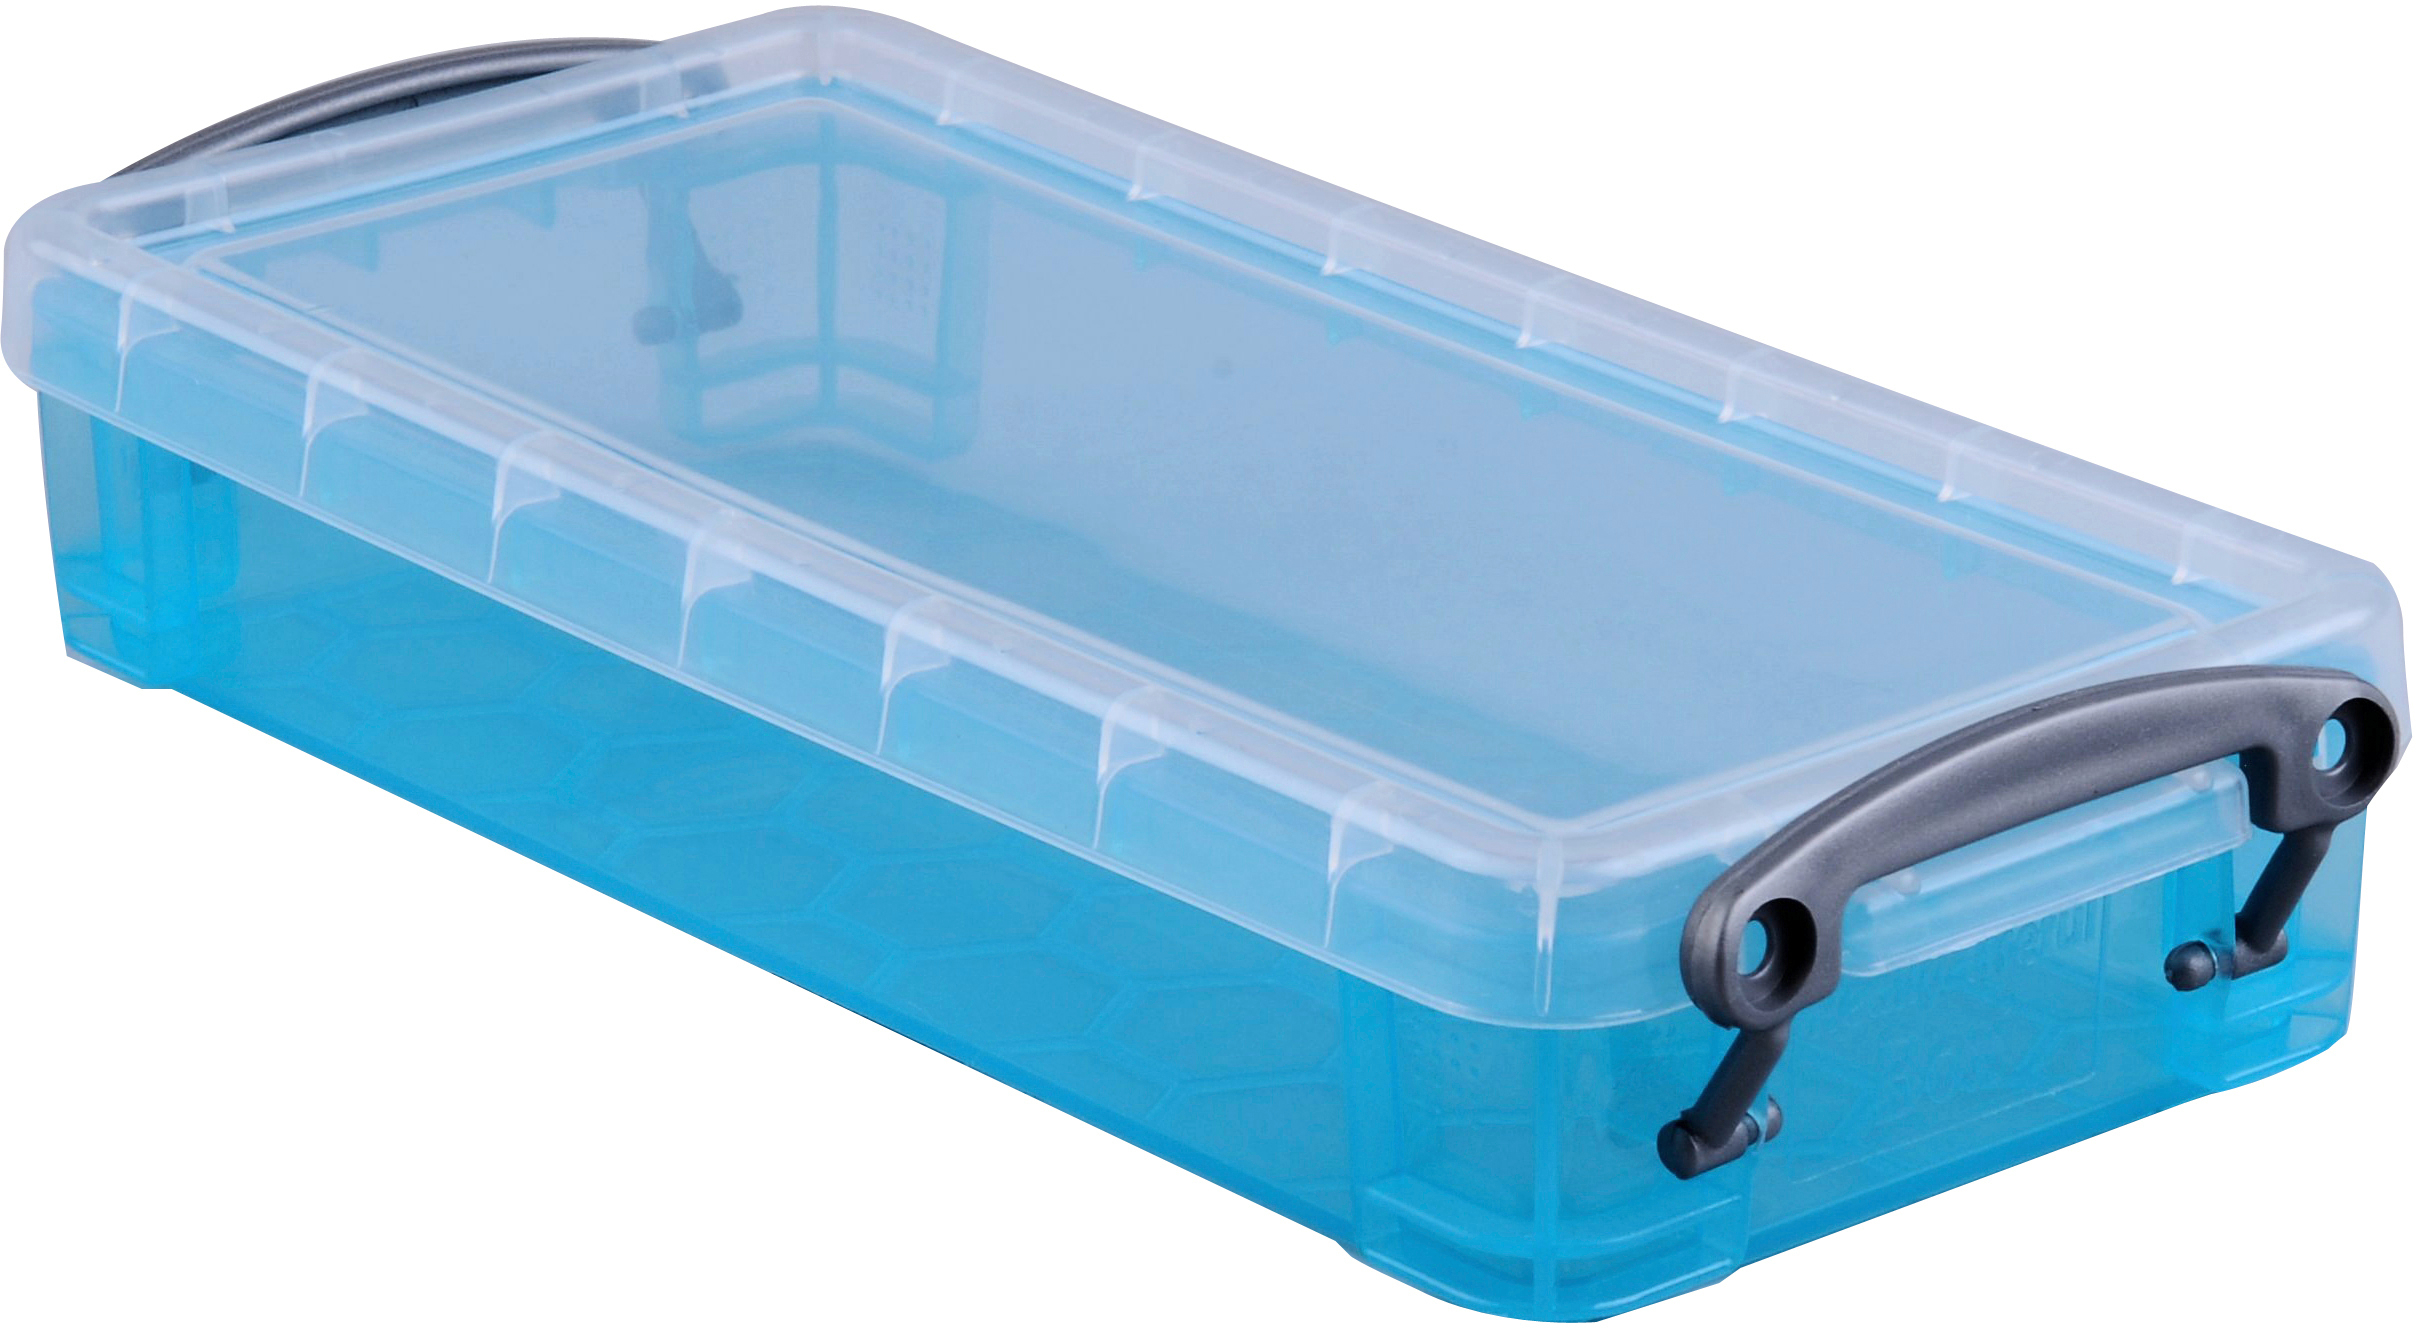 USEFULBOX Box plastifier 0,55lt 68501617 bleu transparent